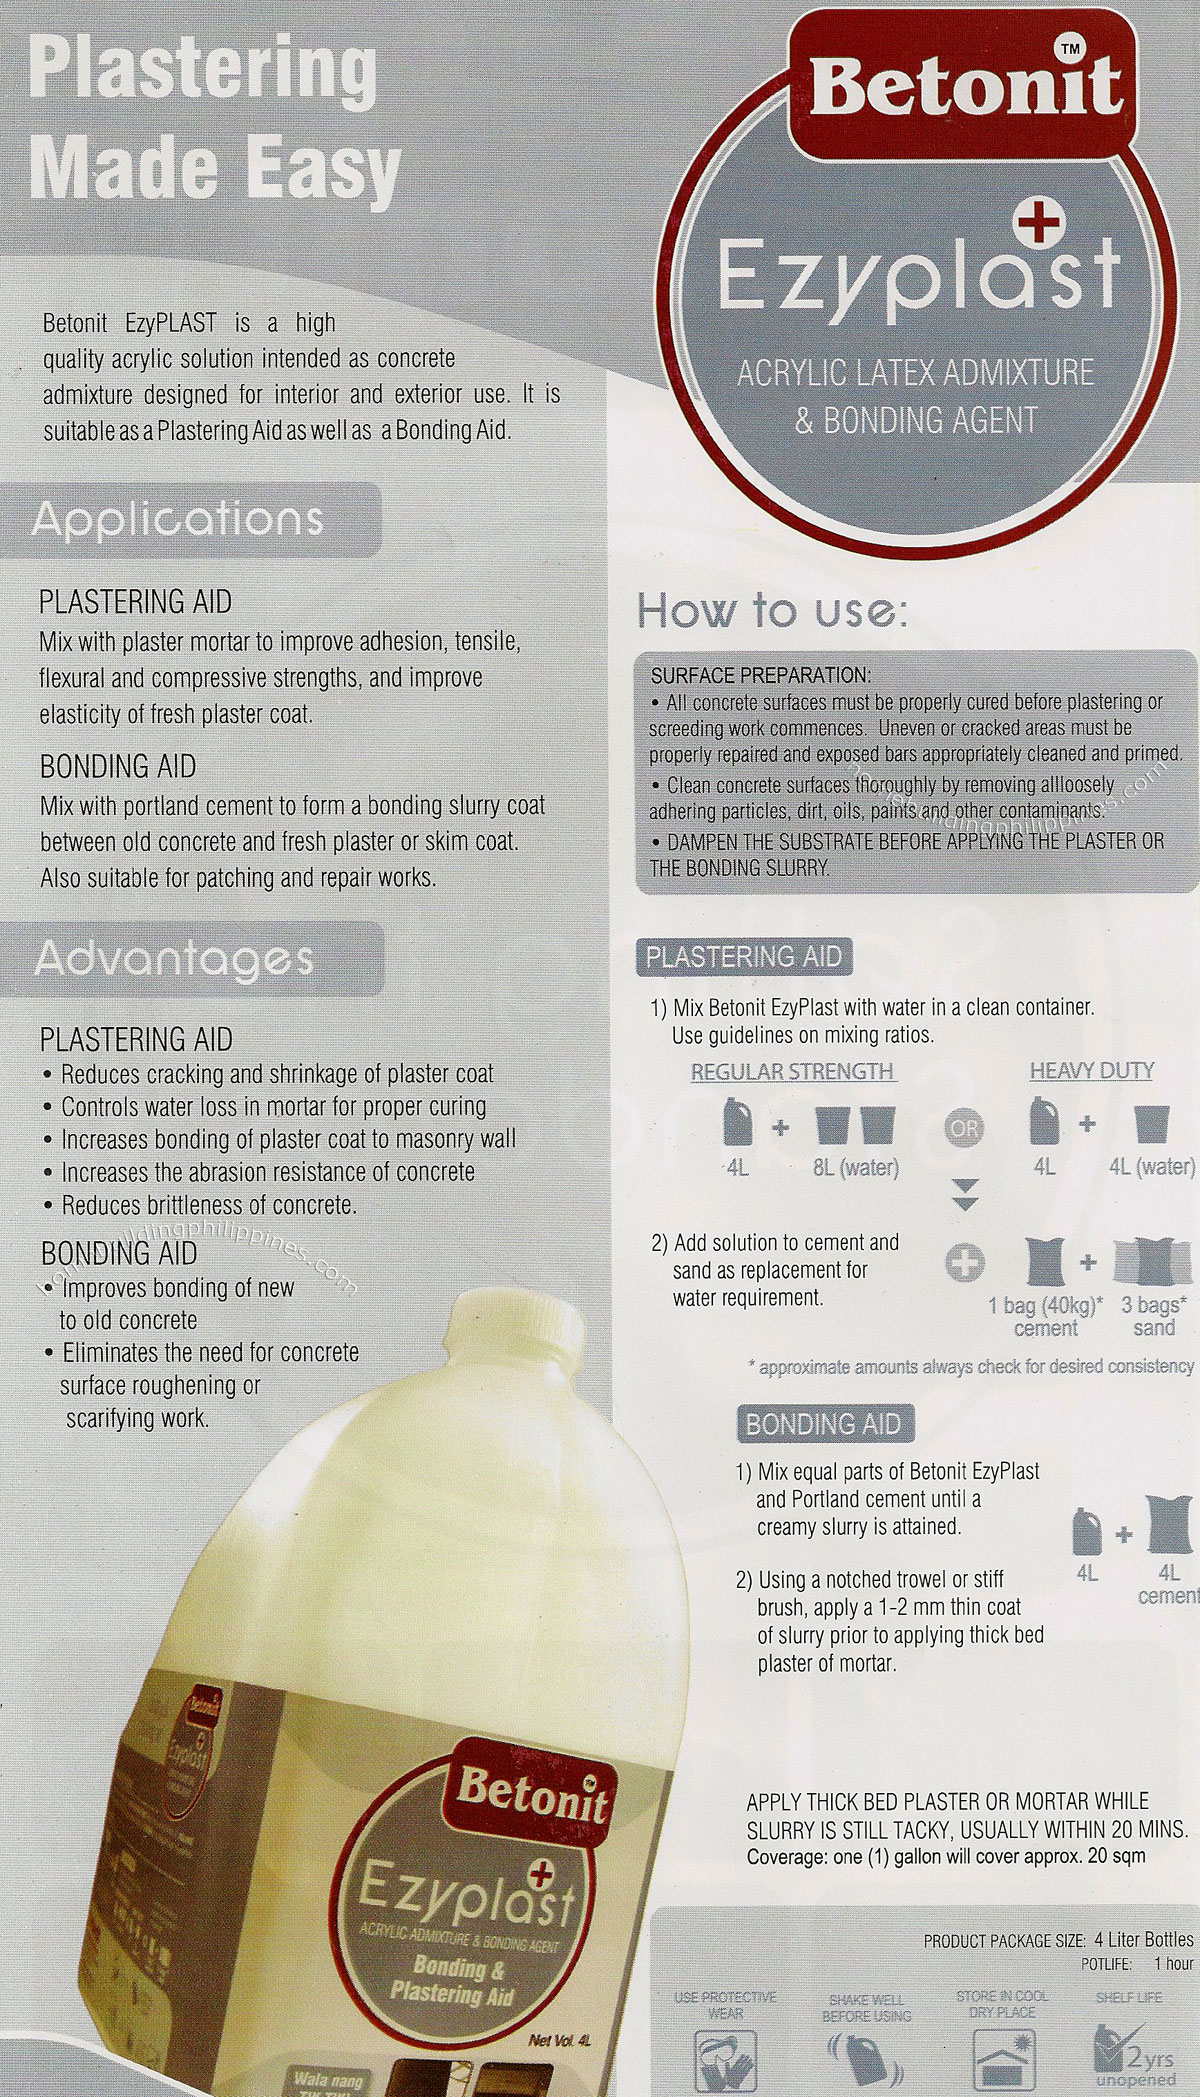 Betonit Ezyplast Plastering Aid Acrylic Latex Admixture and Bonding Agent